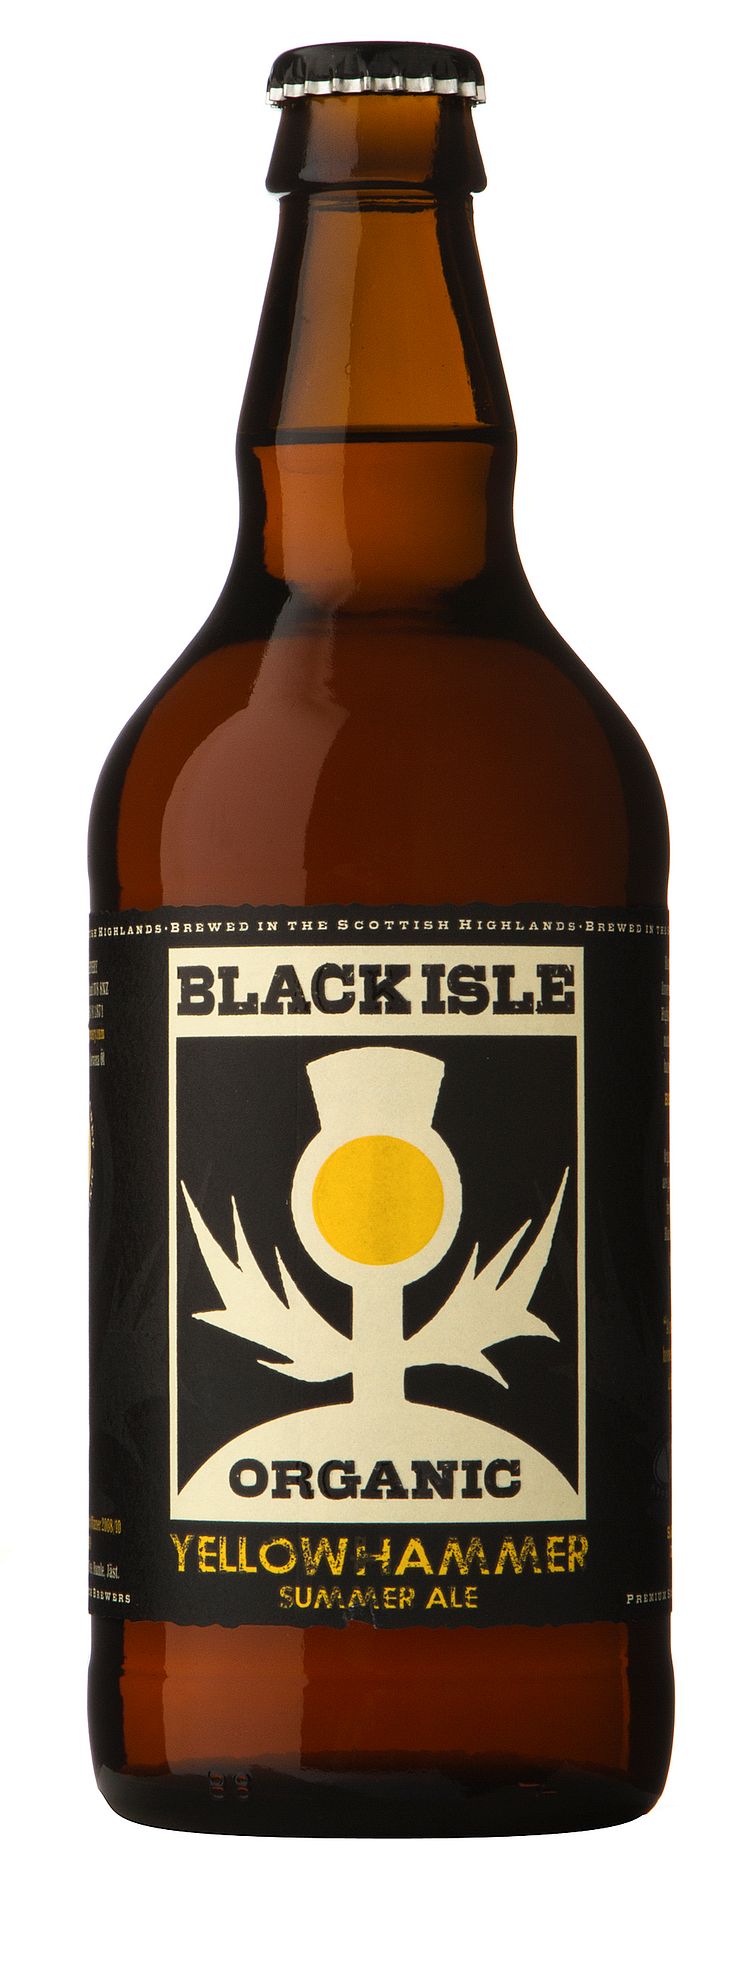 Ny sommaröl från Galatea! Black Isle Yellowhammer Summer Ale